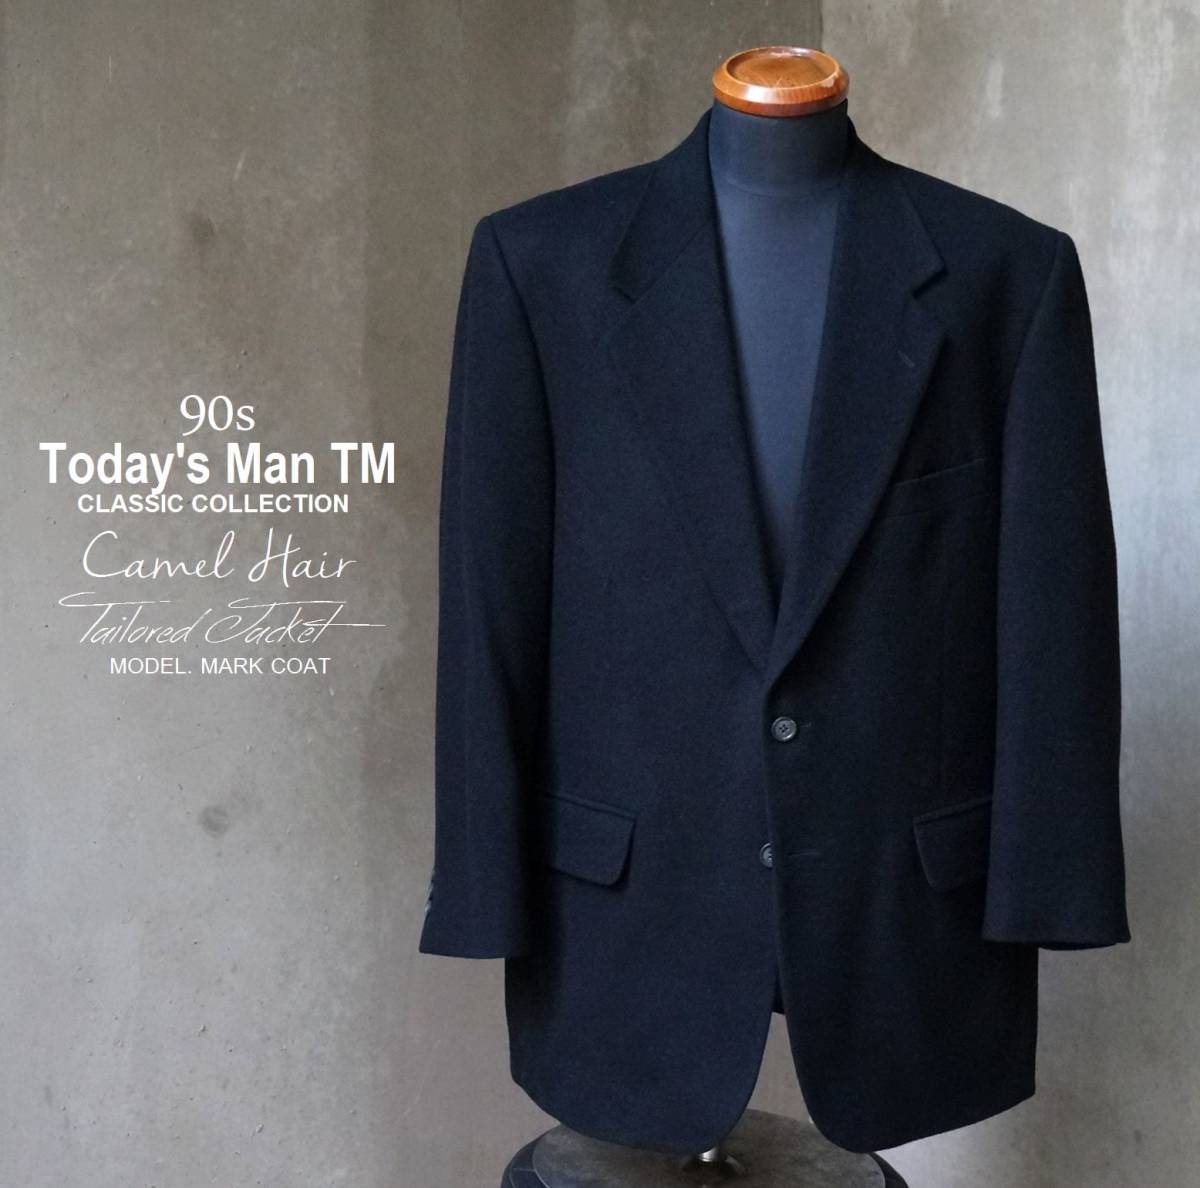 90s Today's Man TM CLASSIC COLLECTION 黒 ブラック キャメルヘア テーラード ジャケット 41R M L相当